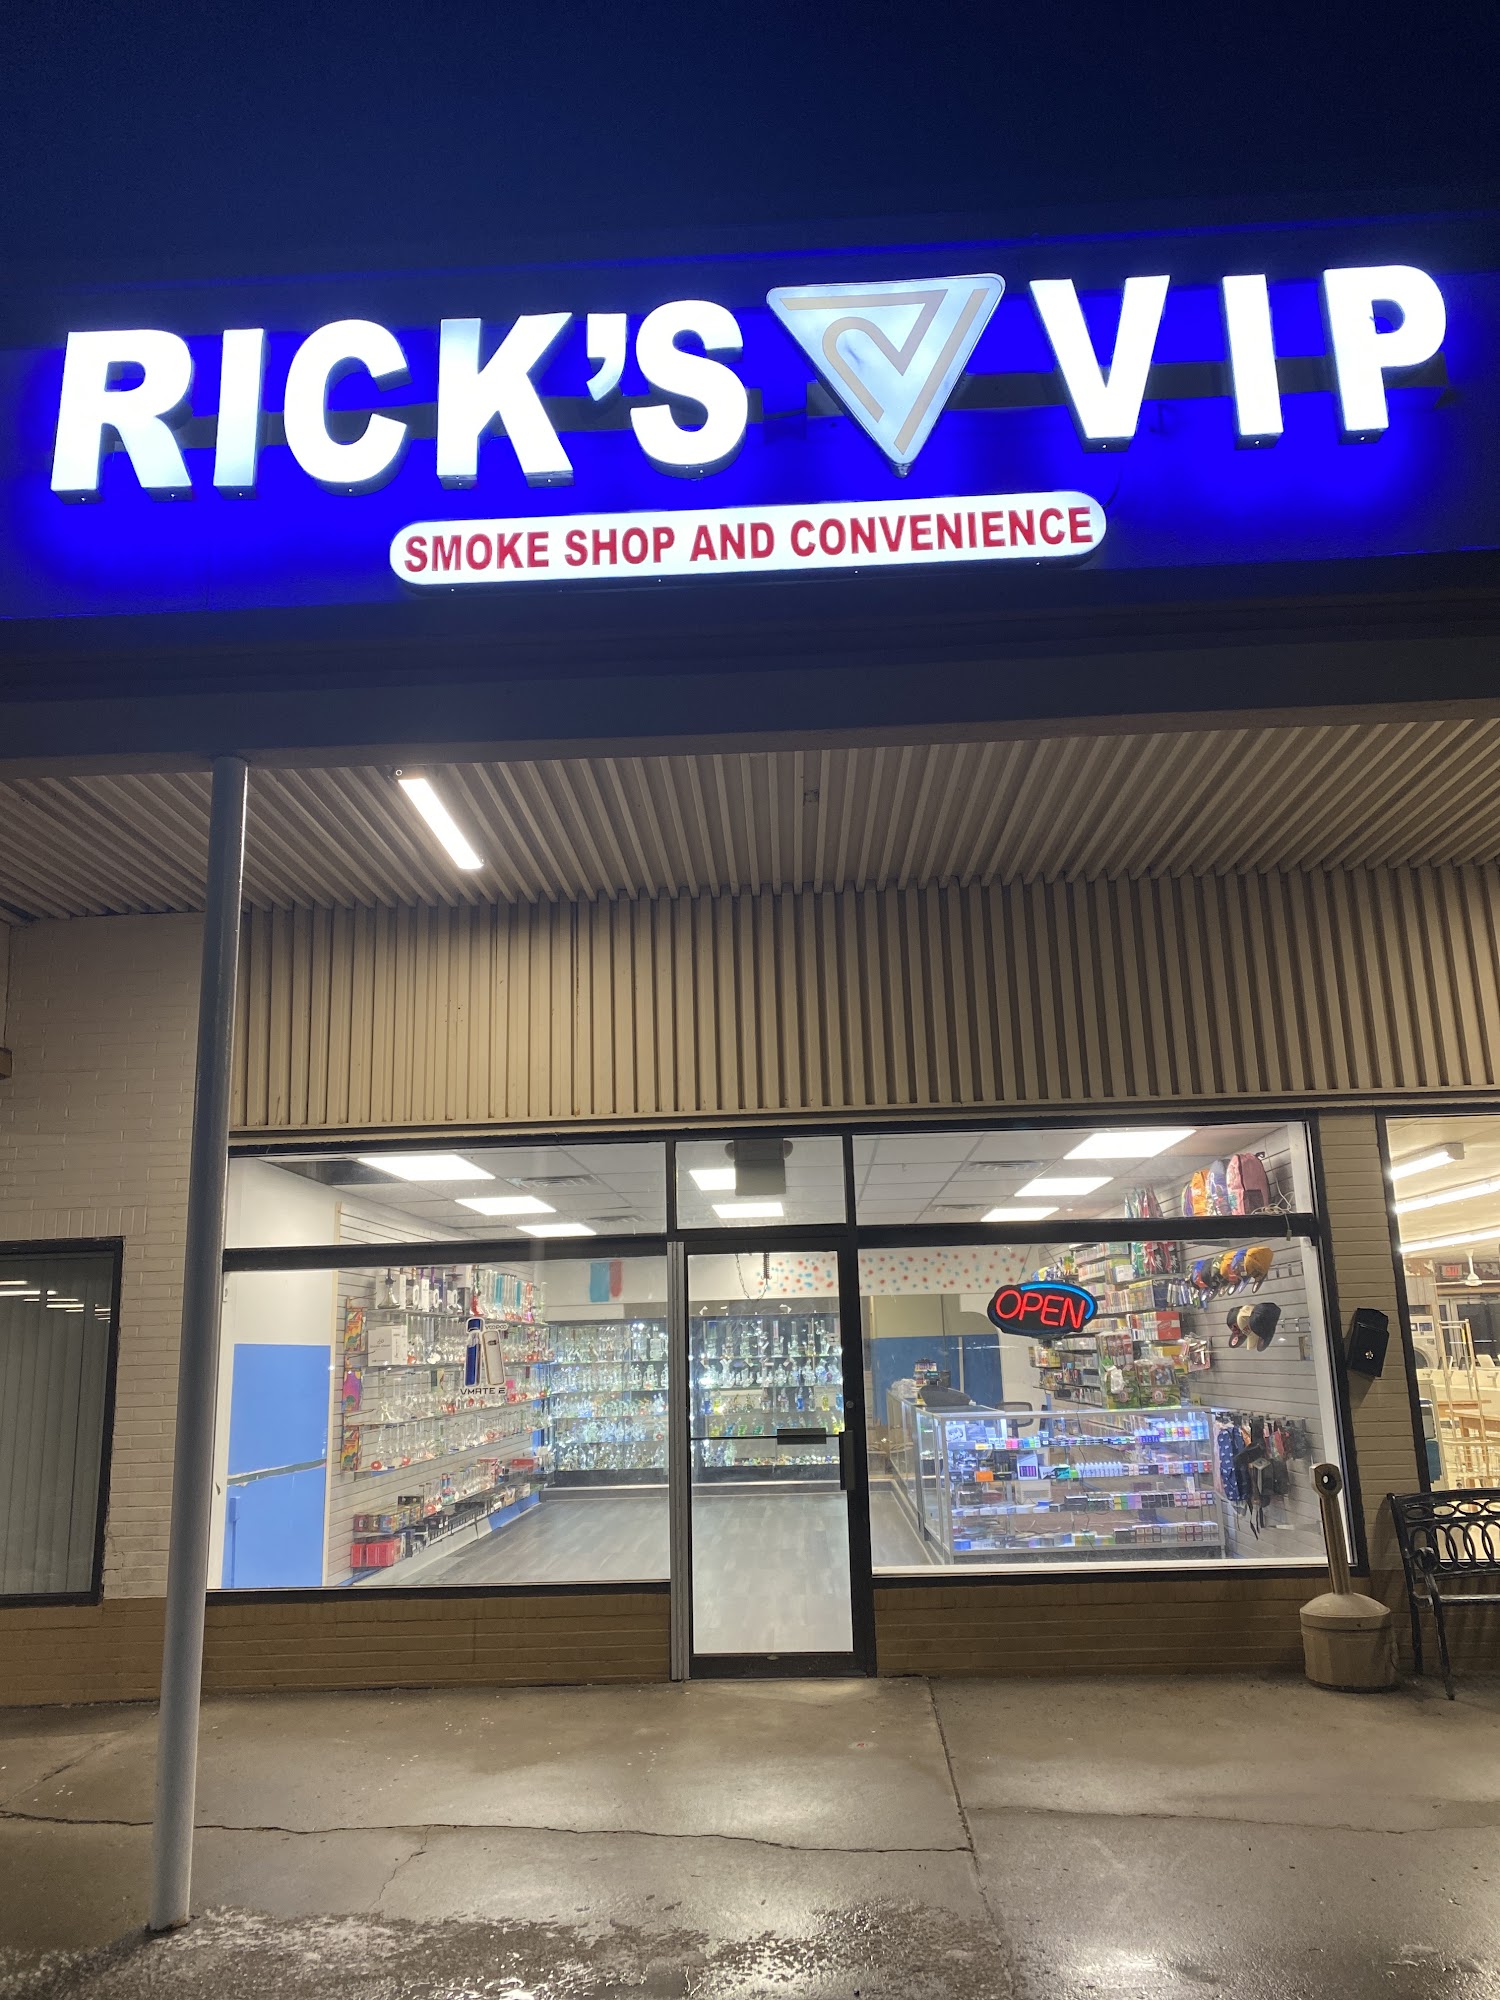 Ricky’s VIP smoke shop